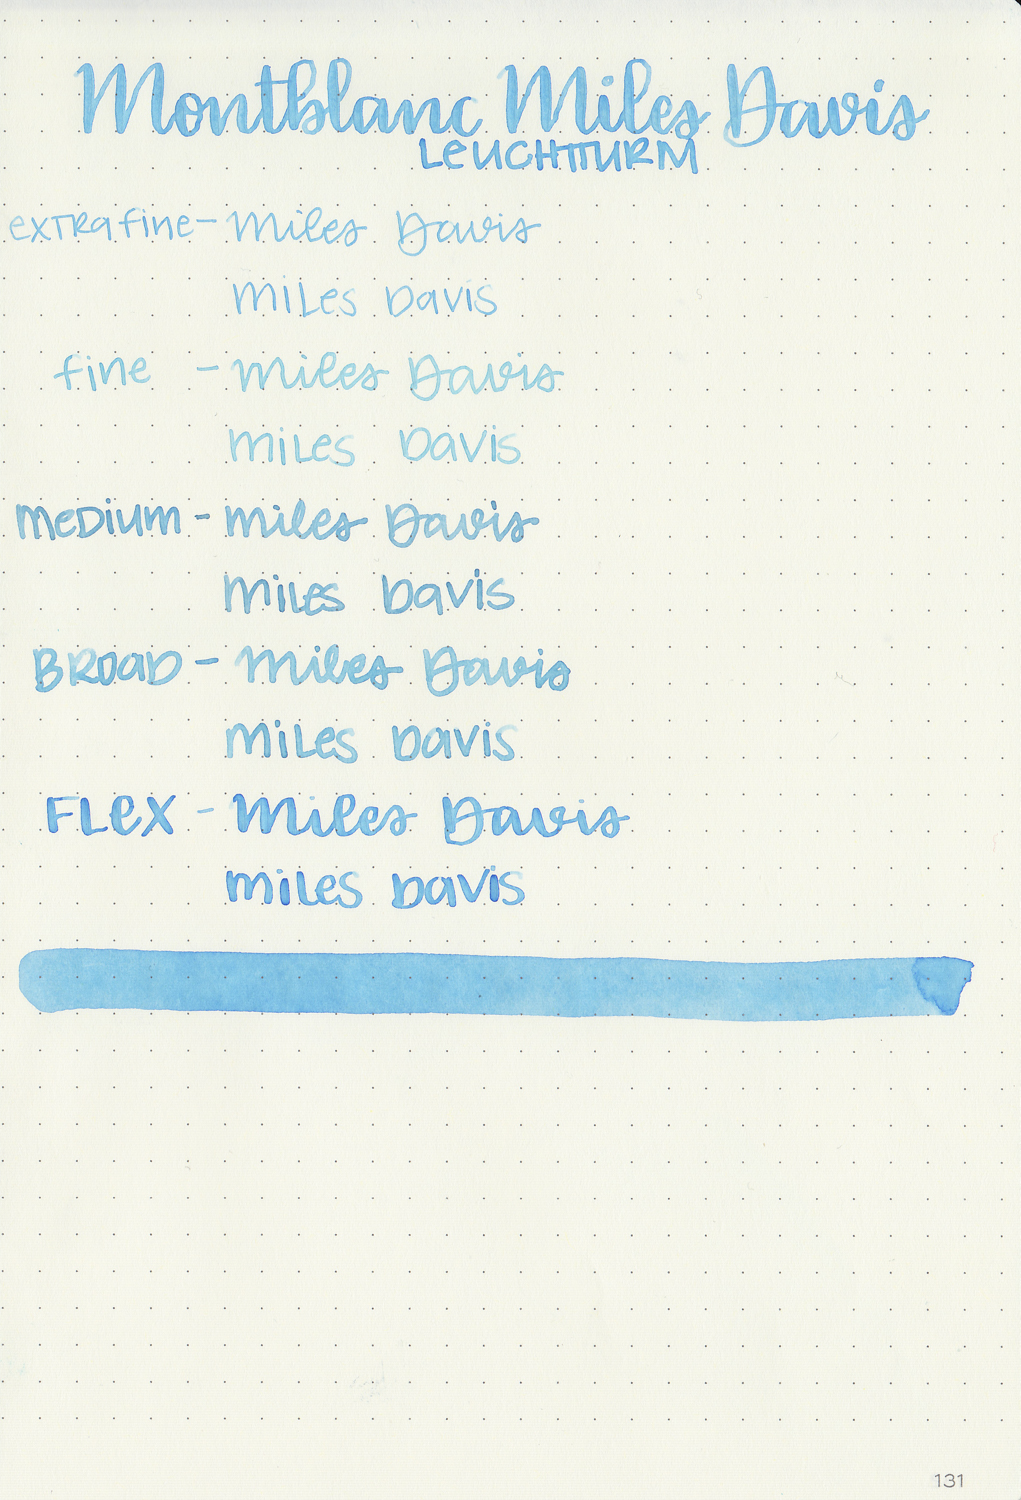 mb-miles-davis-9.jpg